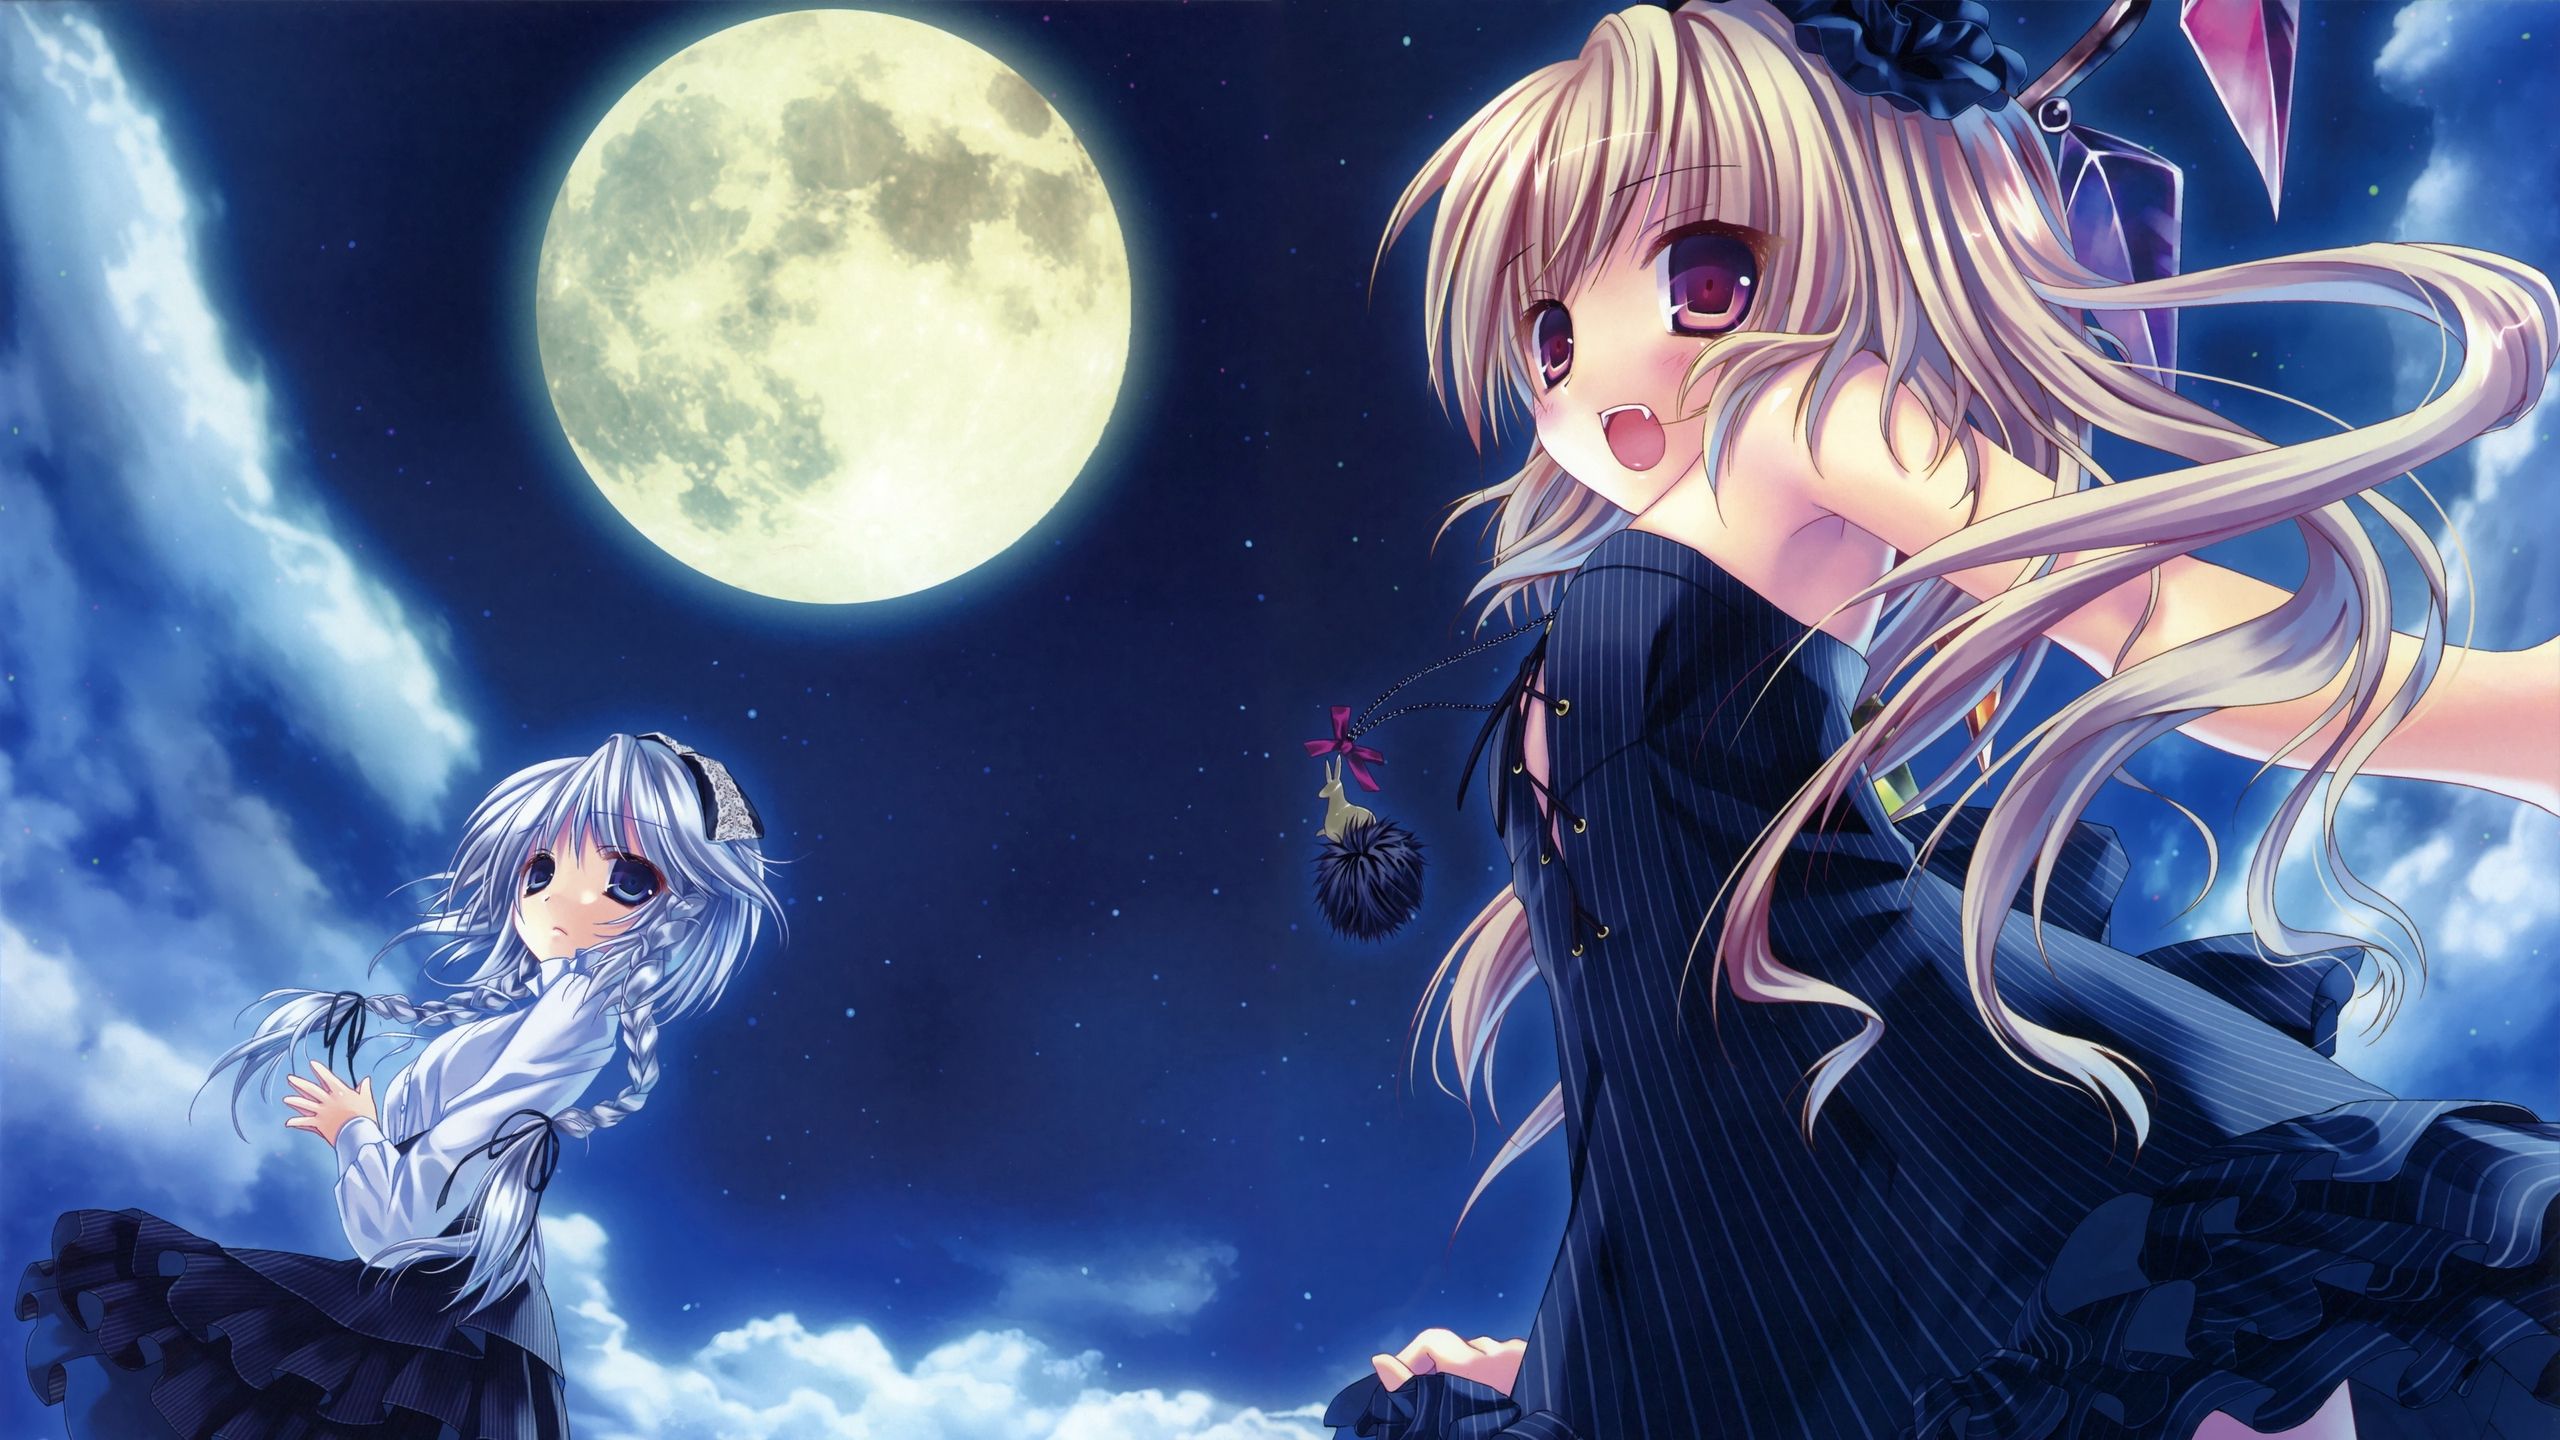 Download wallpaper 2560x1440 anime, girl, vampire, night, moon